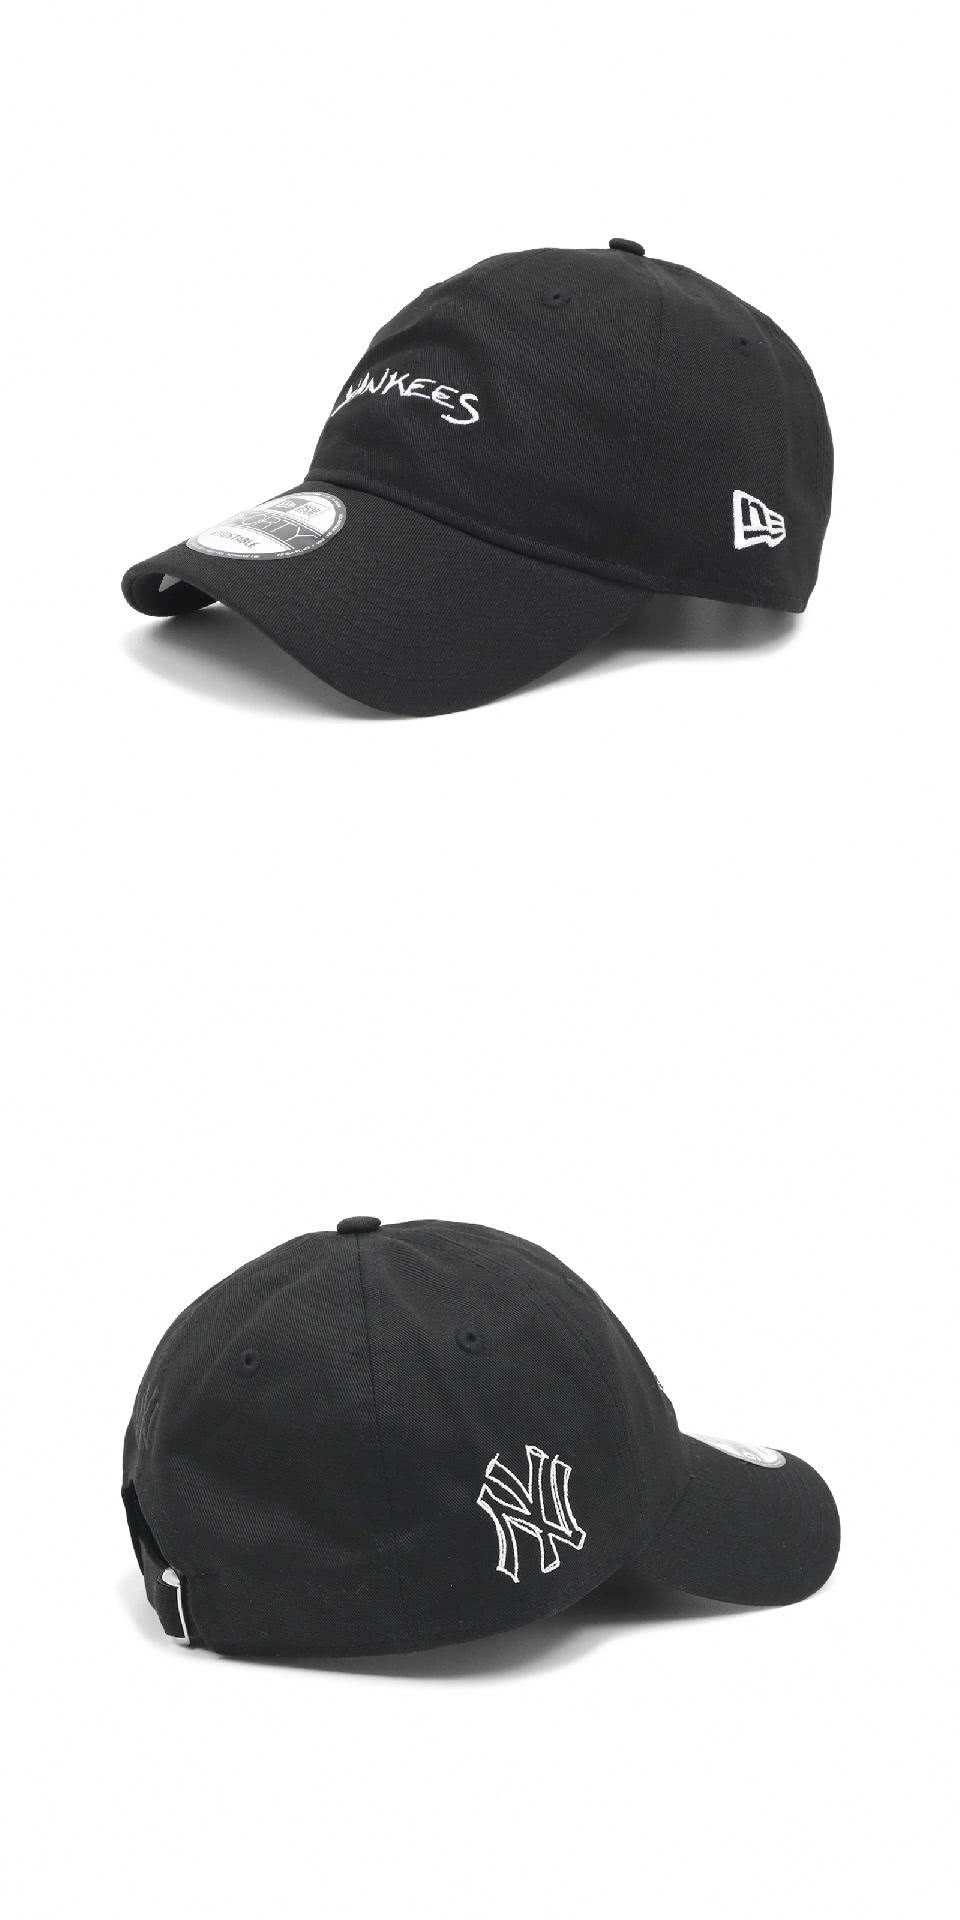 NEW ERA 棒球帽 MLB 黑 白 刺繡 紐約洋基 NY